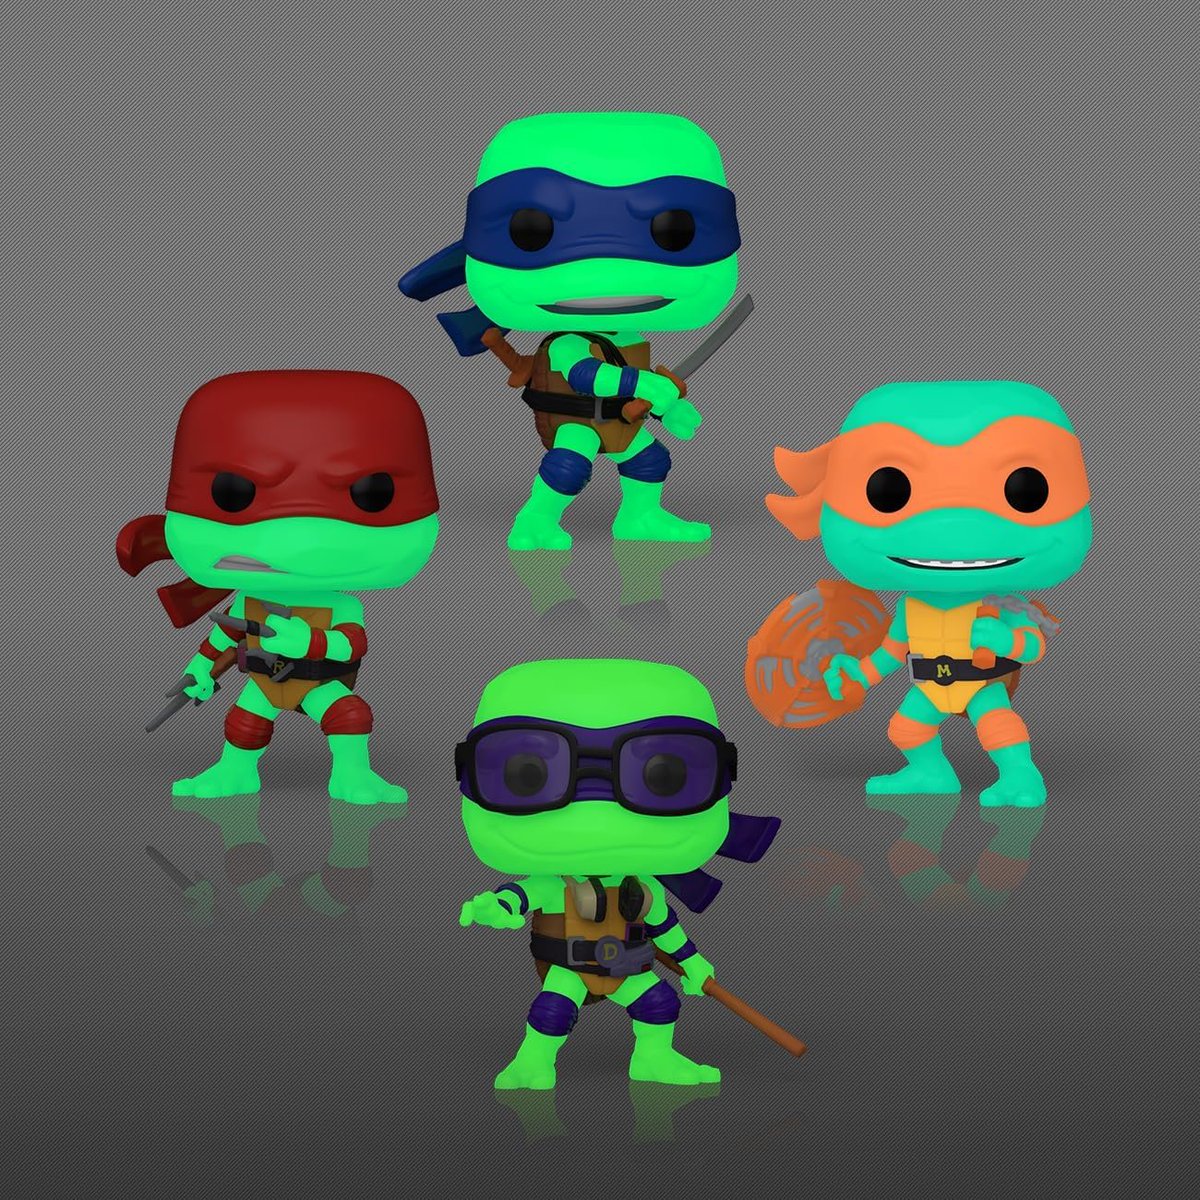 🚨 Preorder Now: Amazon Exclusive Glow in the Dark Teenage Mutant Ninja Turtles: Mutant Mayhem 4-Pack #Ad #TMNT #TMNTMovie #Funko #Pop #FunkoPop #Collectibles #Toys #FunkoFinderz

amzn.to/44lADNL